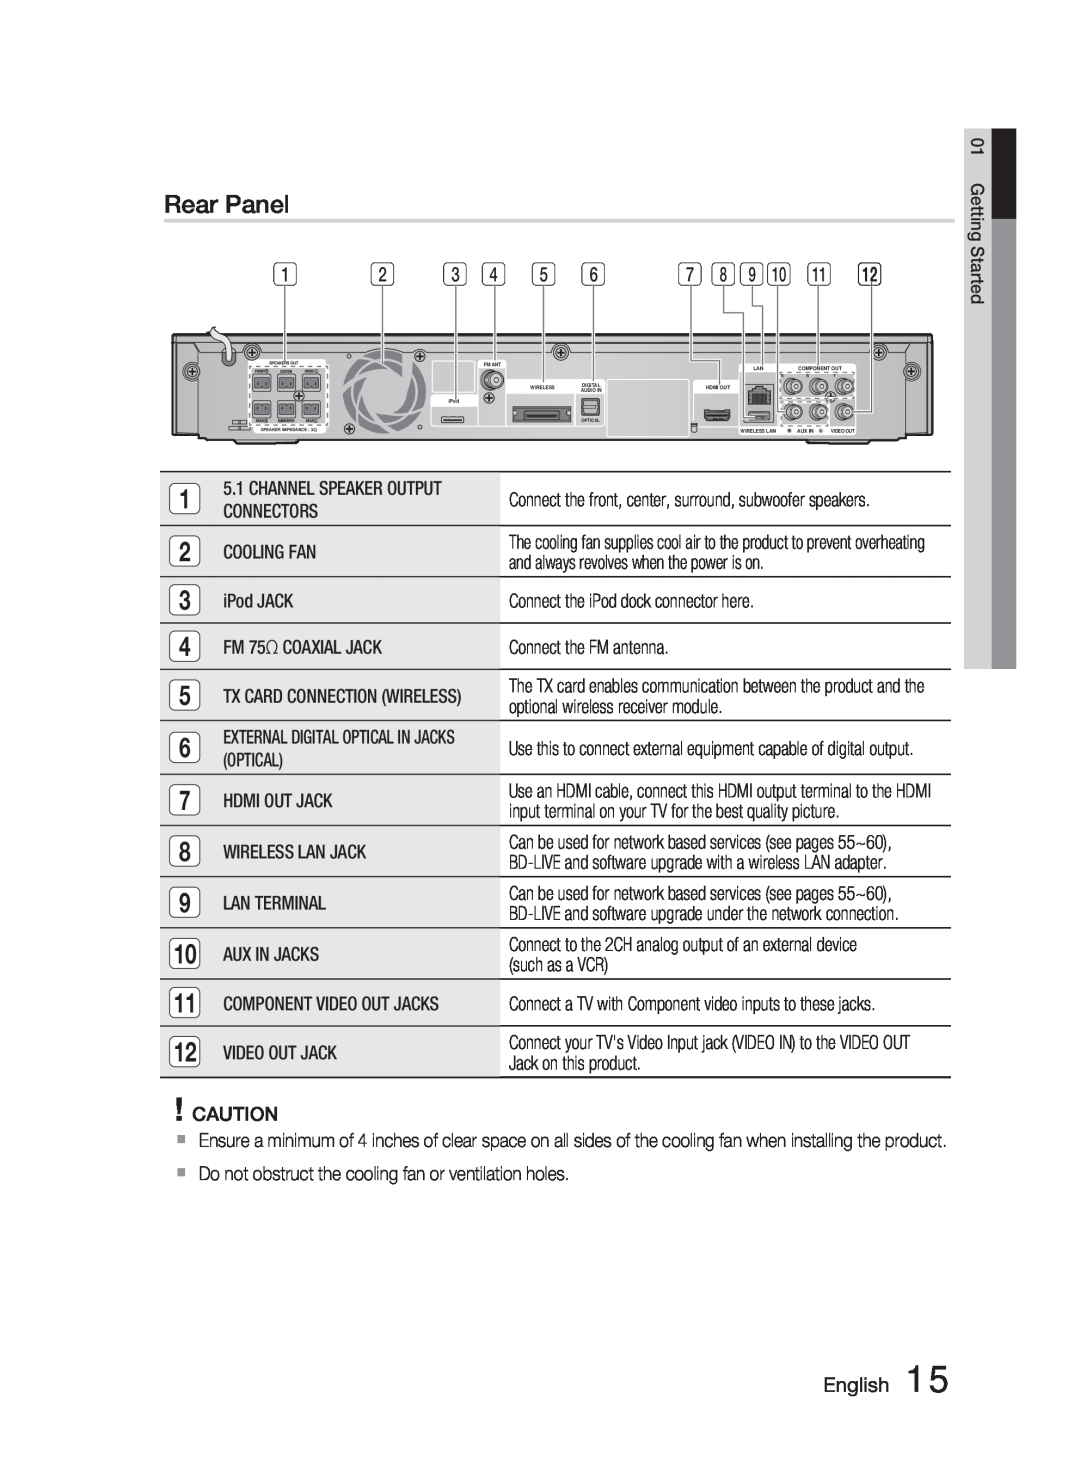 Samsung HT-C5500 user manual Rear Panel, English 